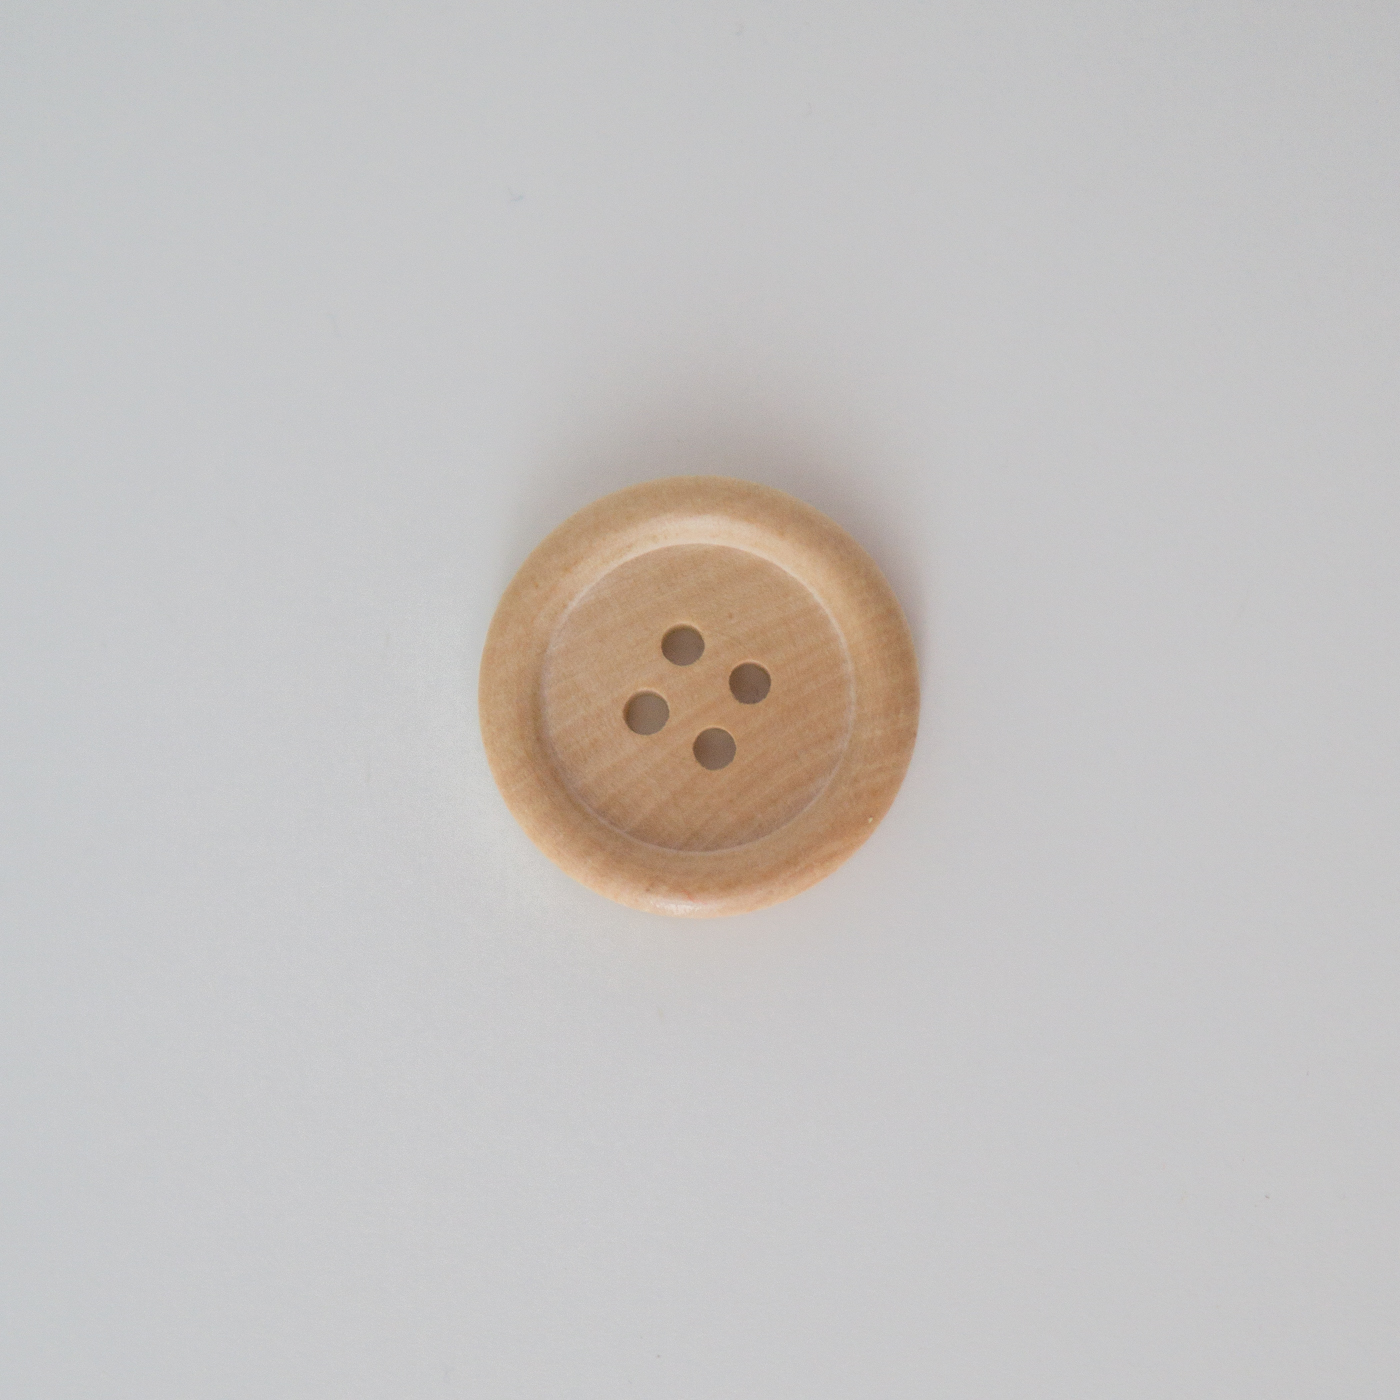 treknapp 4 hull - Wooden button | Natural light wood button knitting,18 mm - by HipKnitShop - 16/10/2018